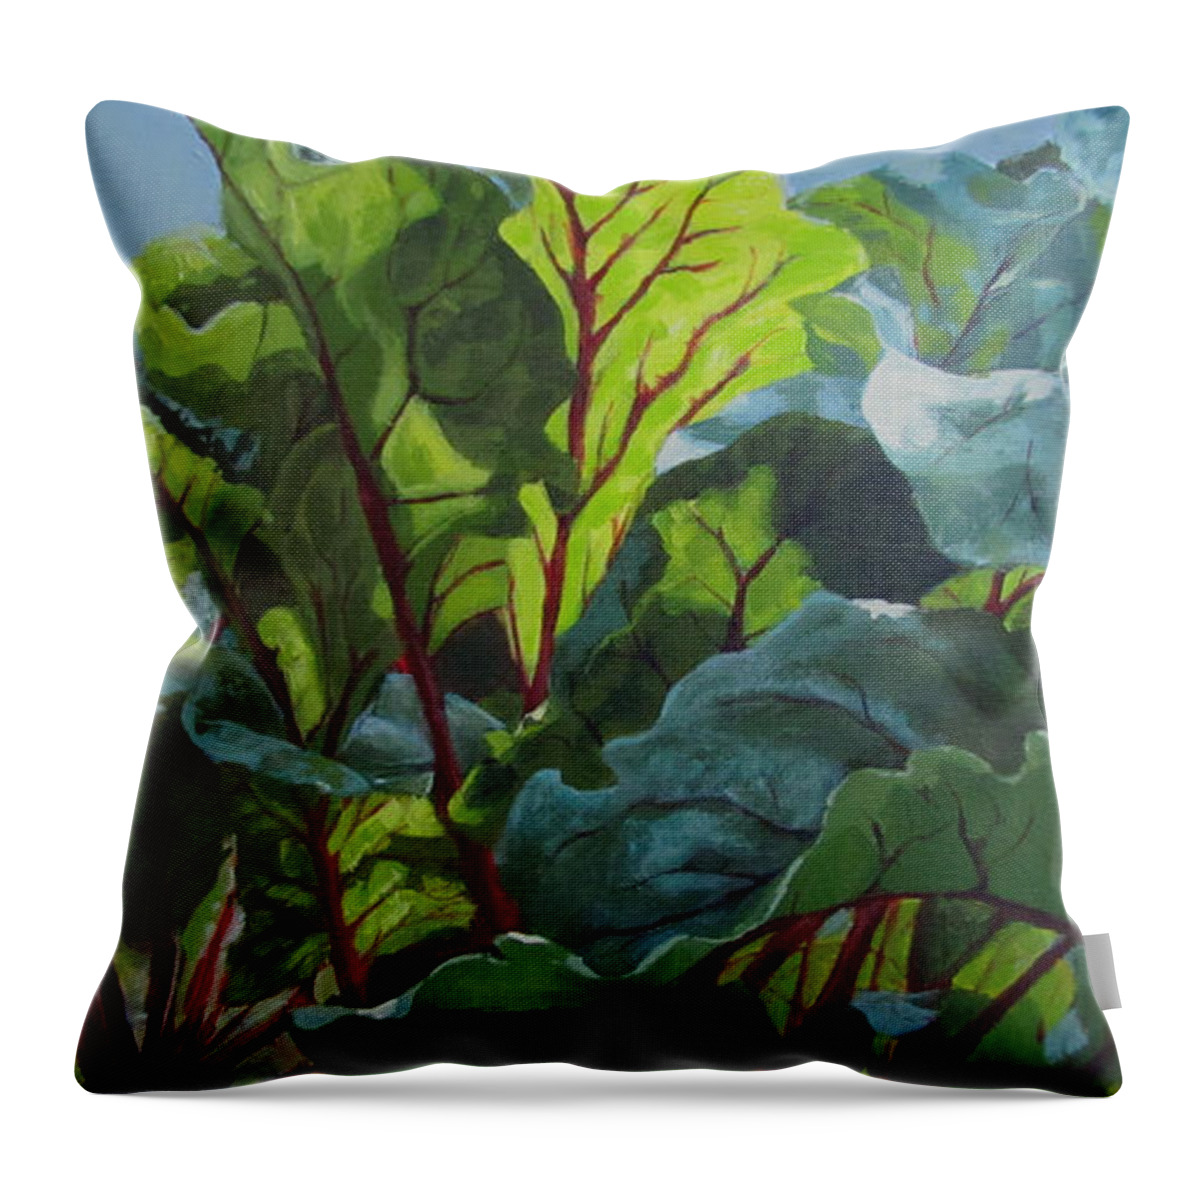 Garden Throw Pillow featuring the painting Beets O My Heart by Karen Ilari